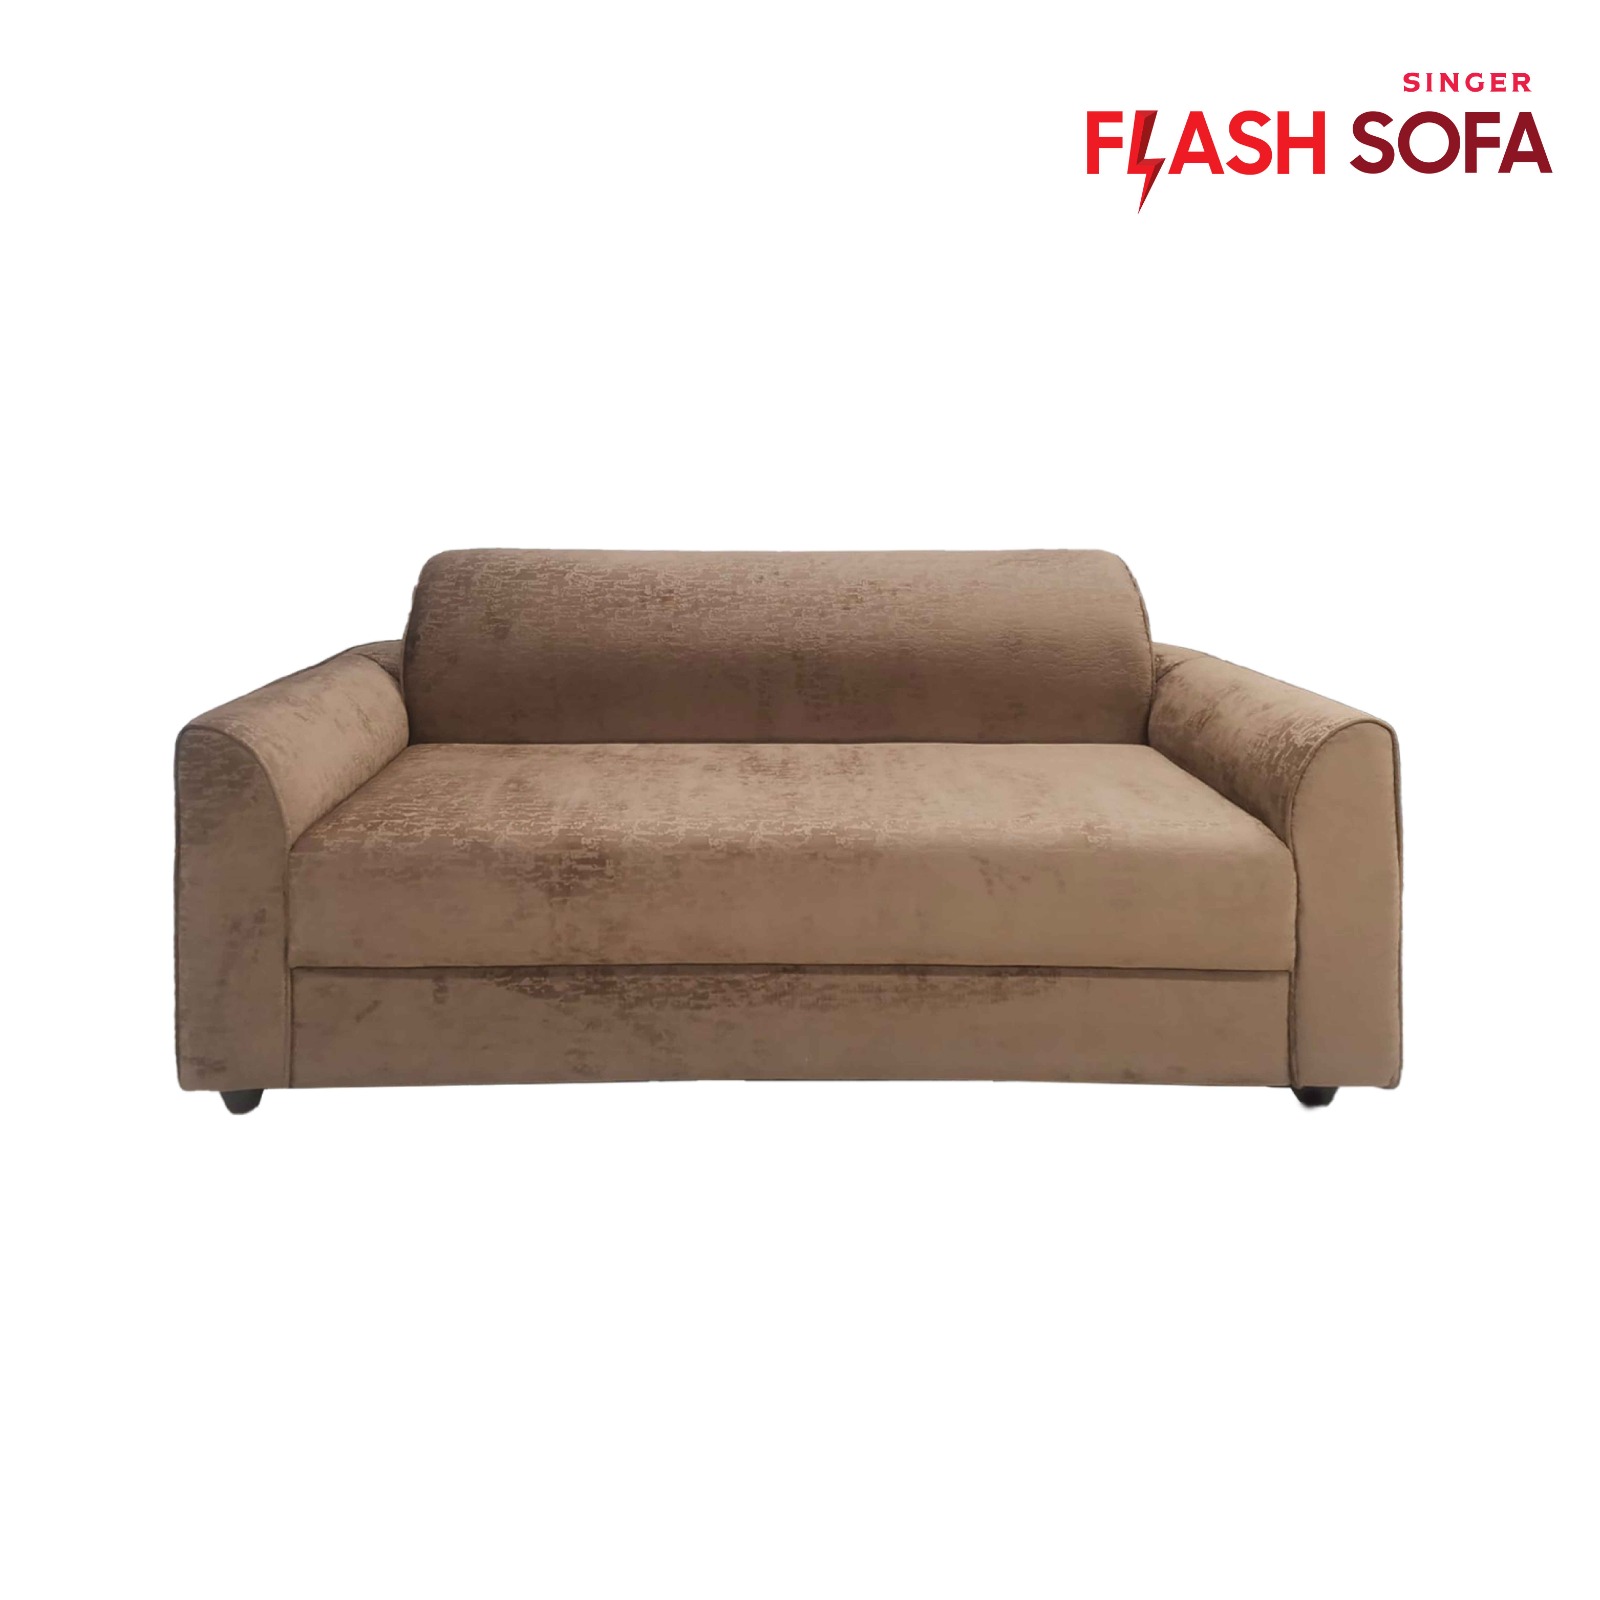 3 Seater Flash Sofa - Dark Brown